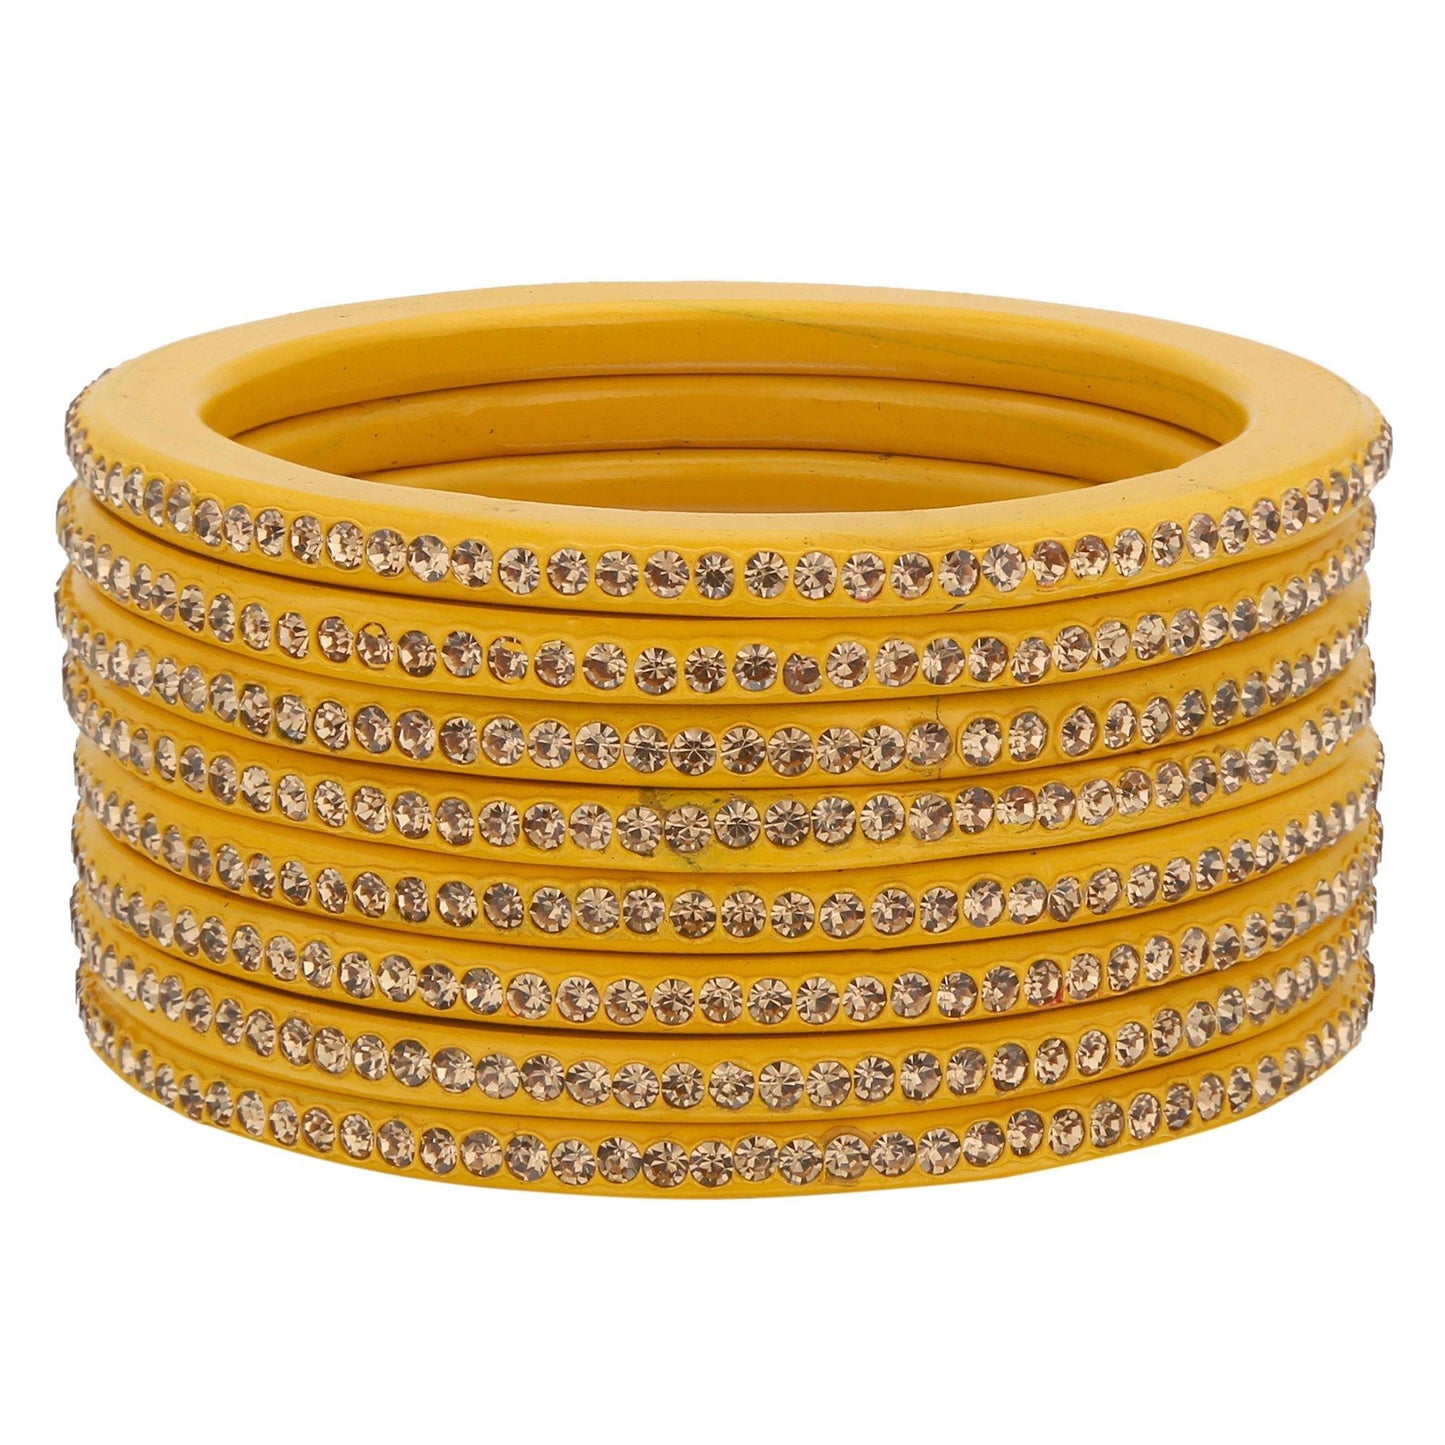 sukriti rajasthani ethnic yellow lac bangles for women- set of 8